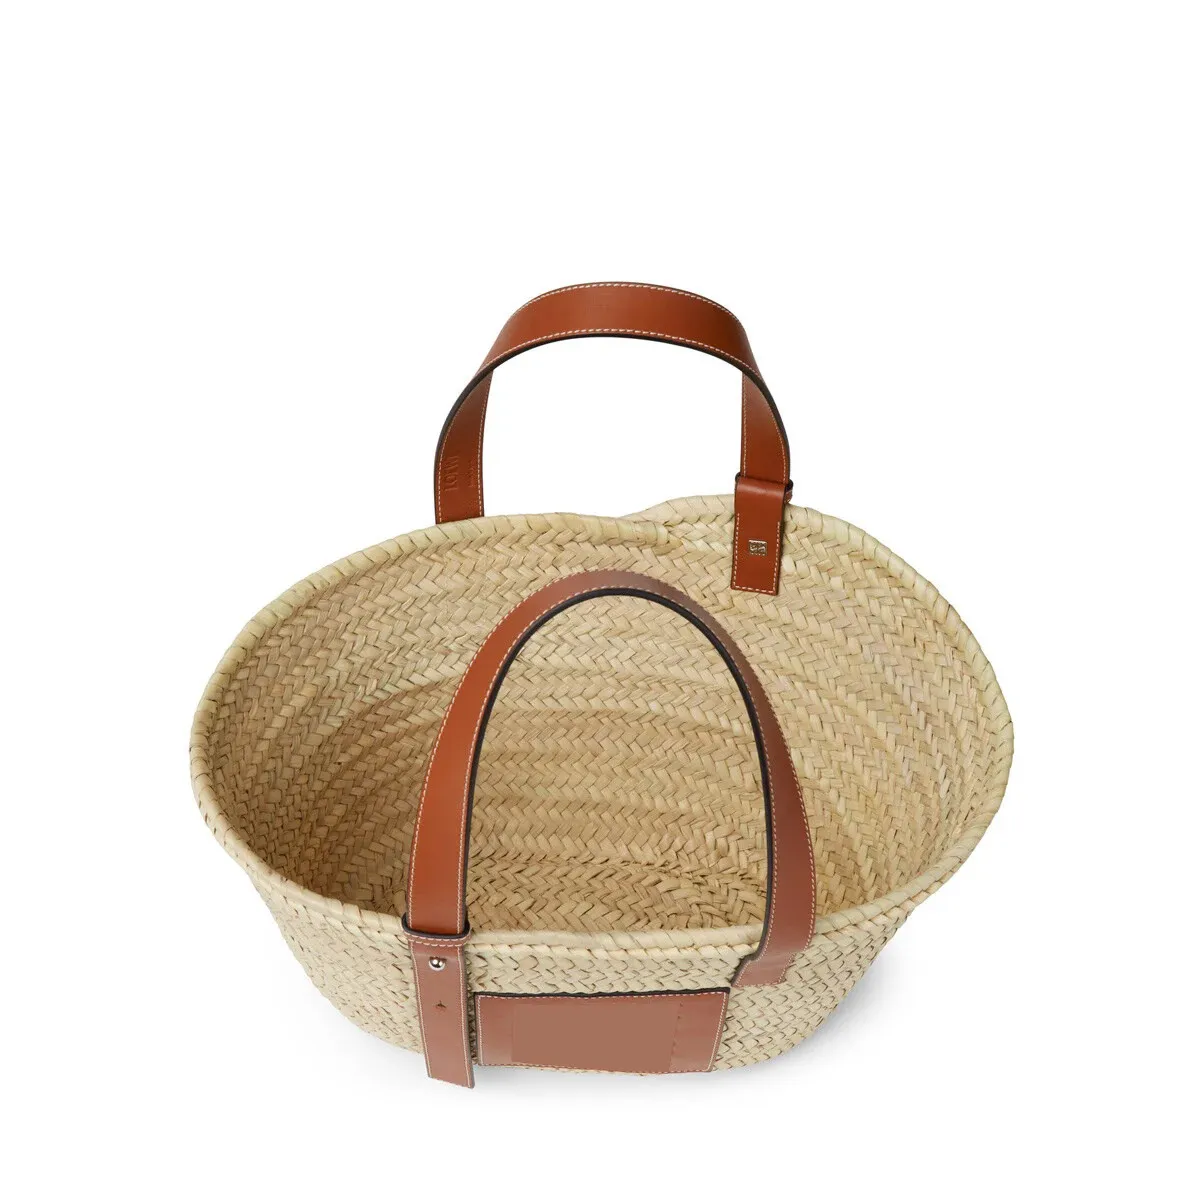 Sacs de créateurs pour femmes Grass Woven Basket Sac Trend Great En cuir Holiday Beach Handbags230a